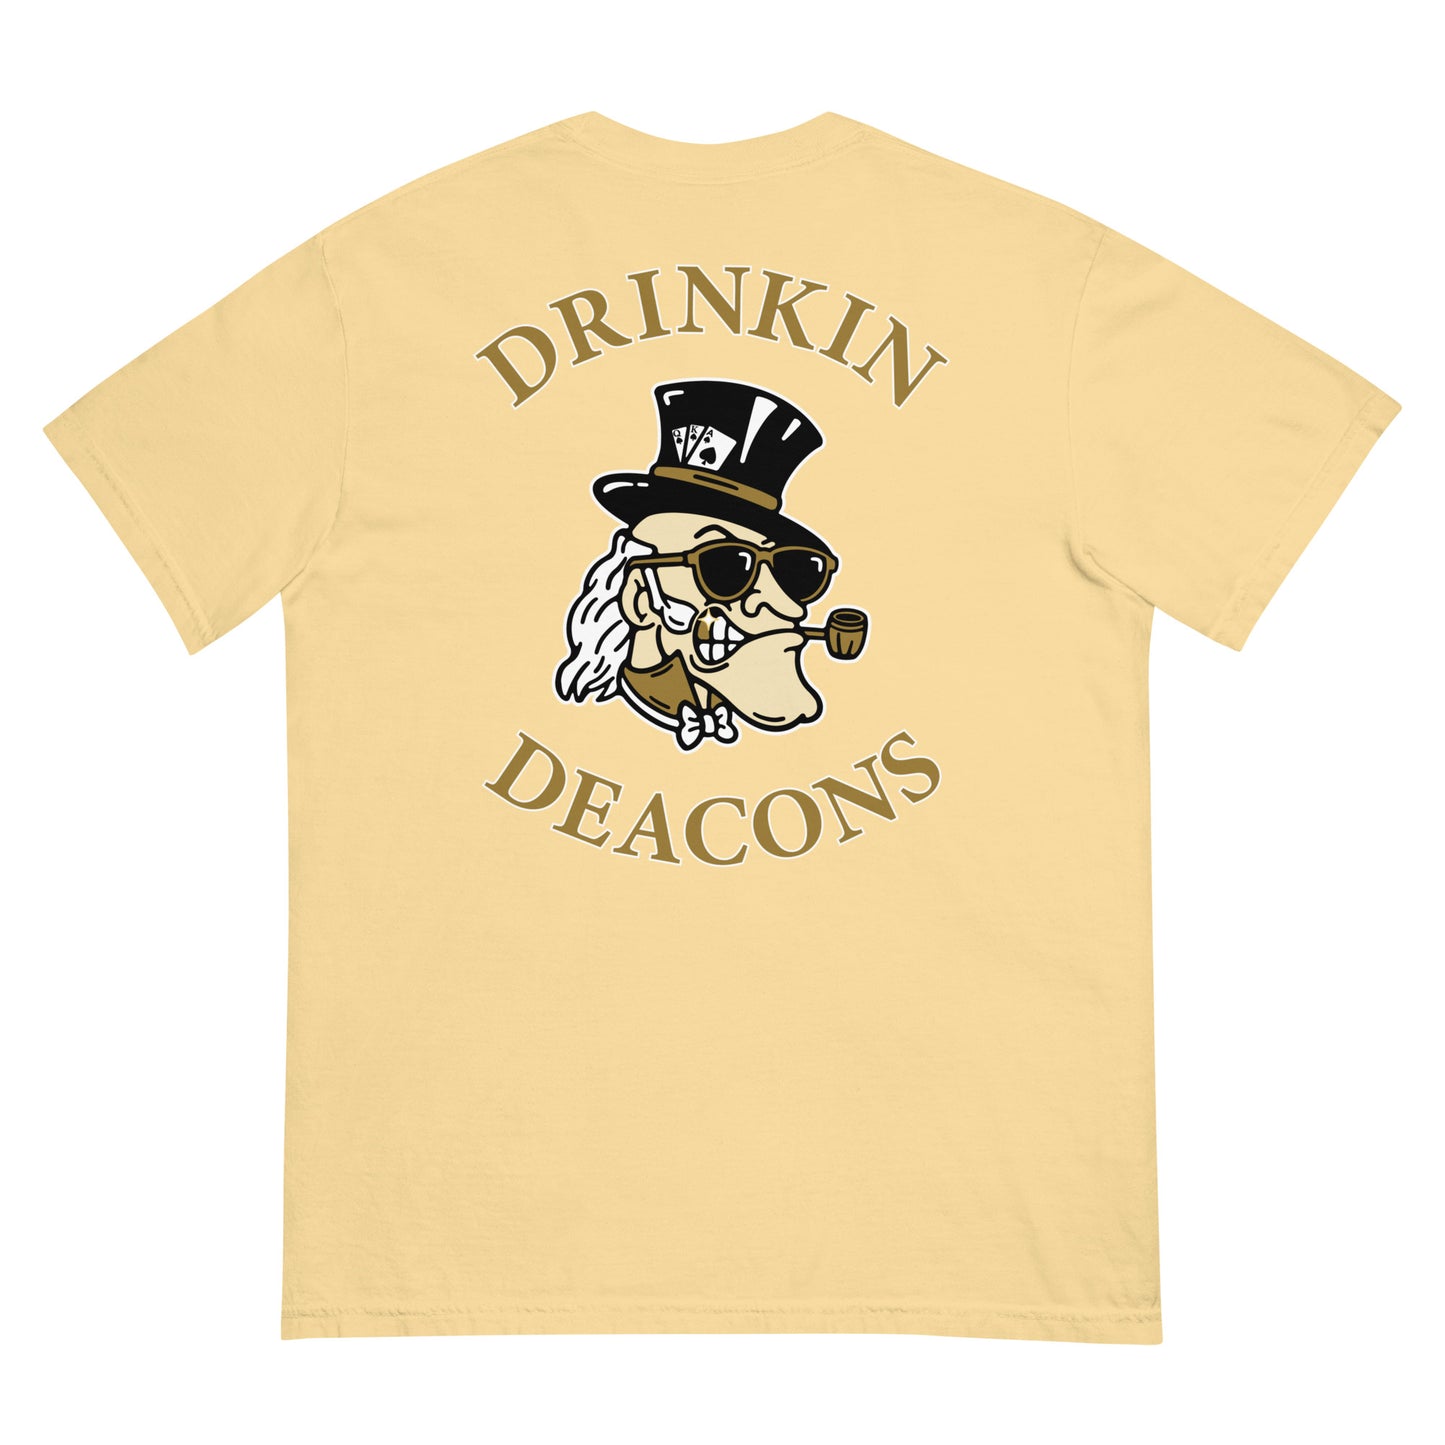 Drinkin Deacons front/back